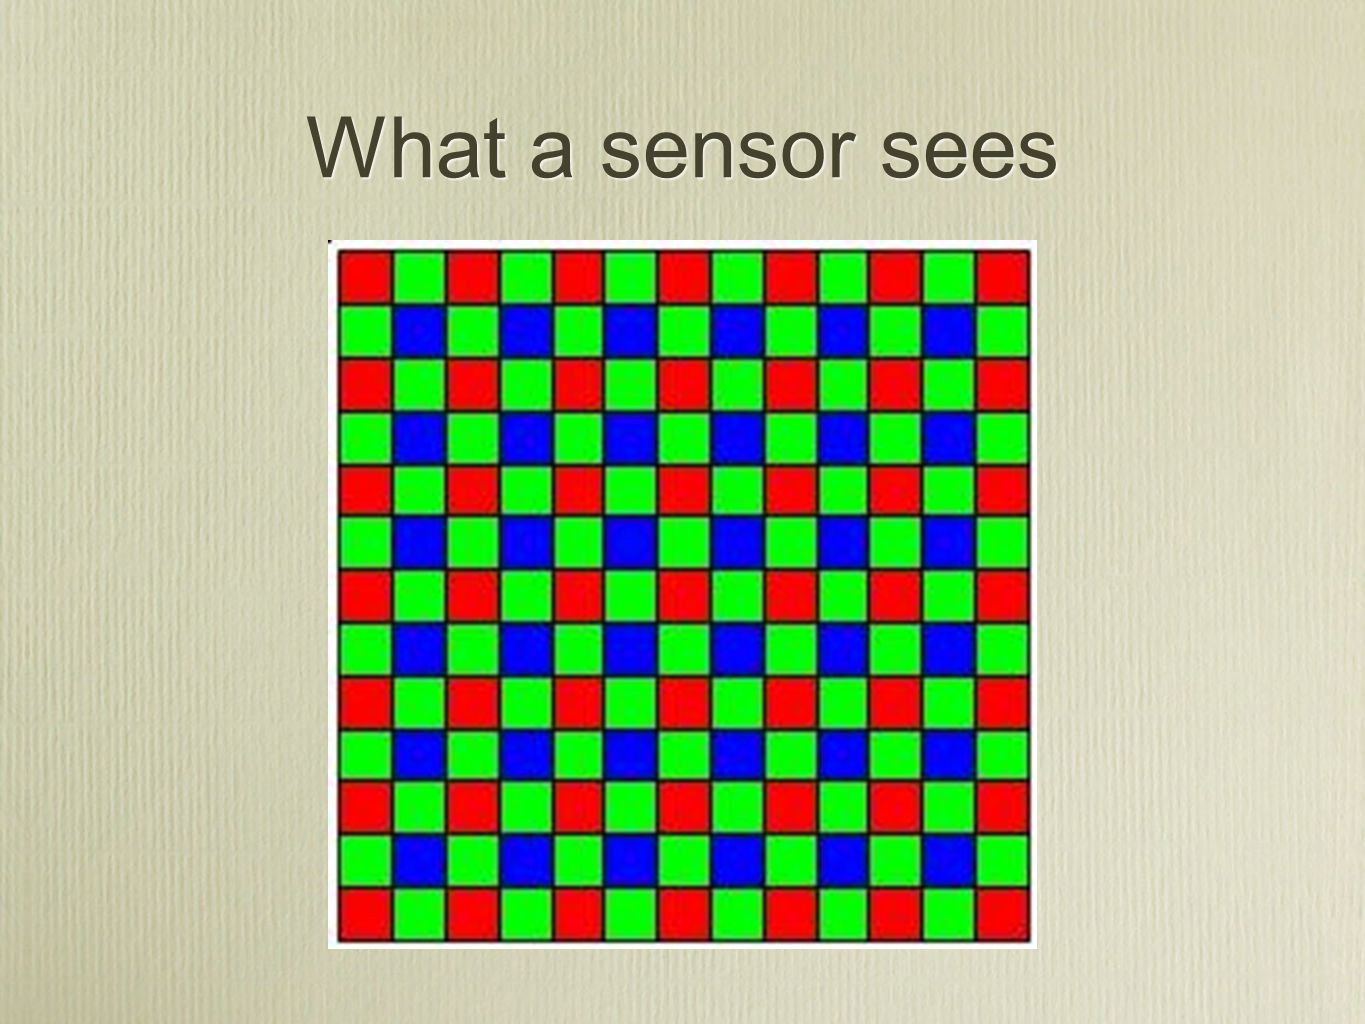 What a sensor sees